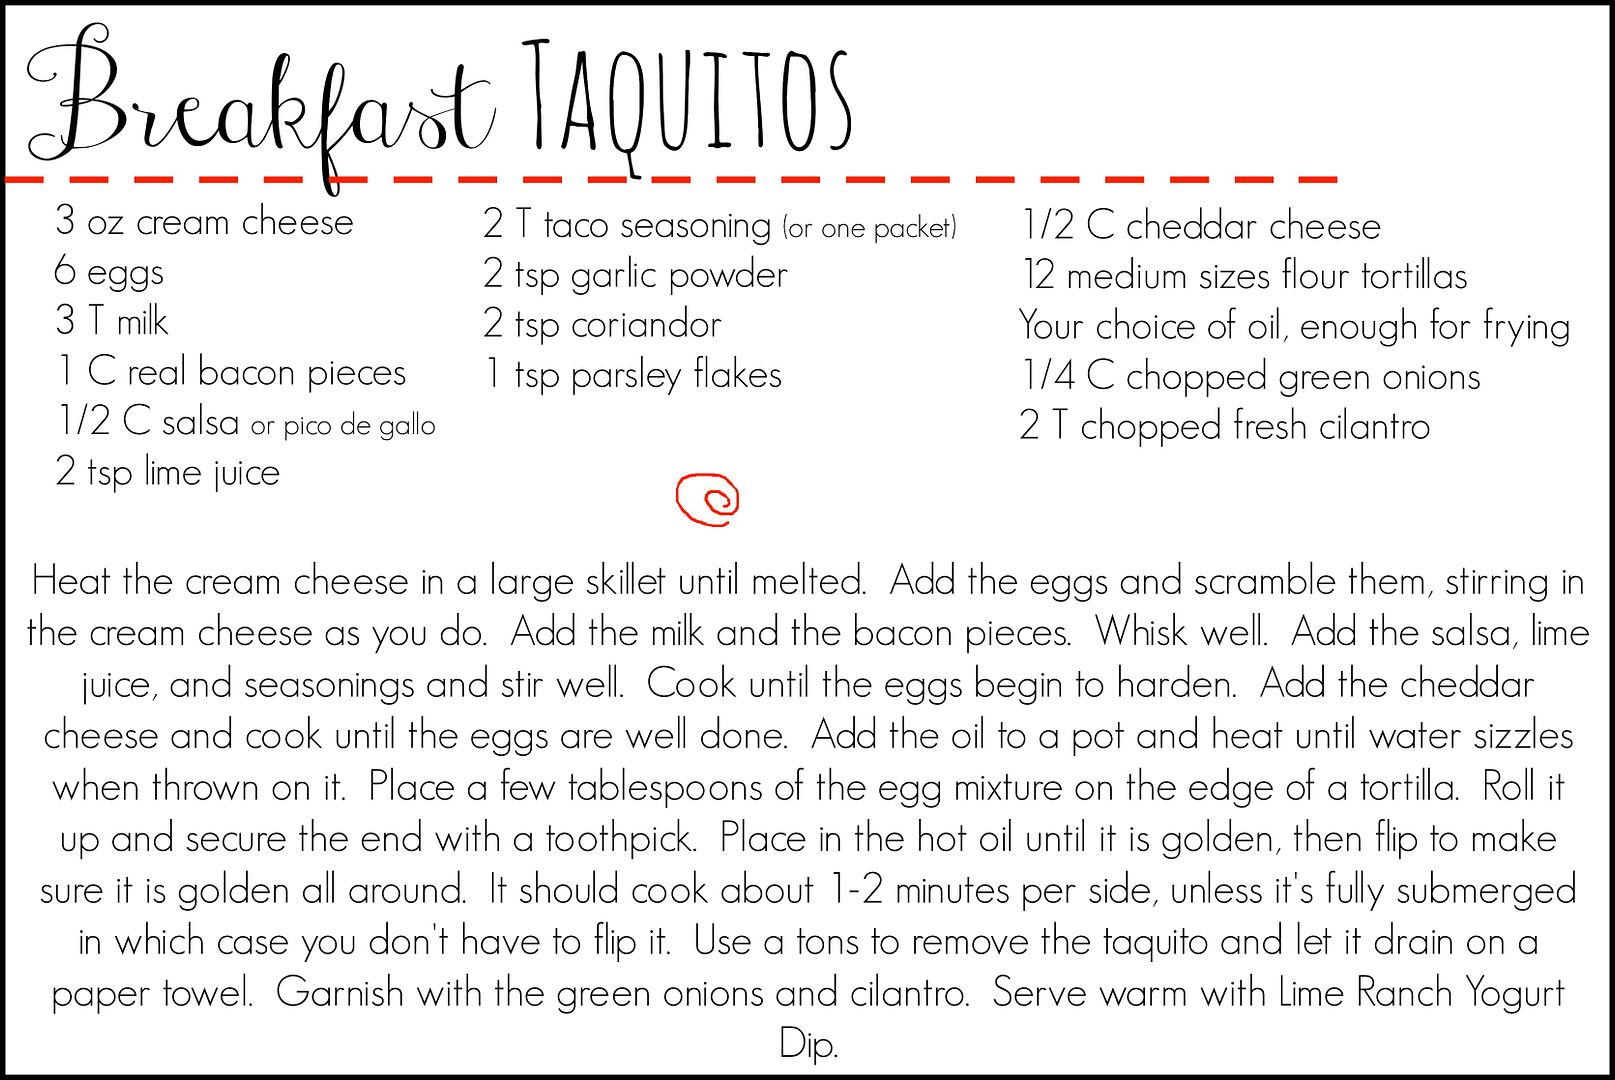 breakfast taquito recipe photo breakfasttaquitos_zps68fd2c3d.jpg